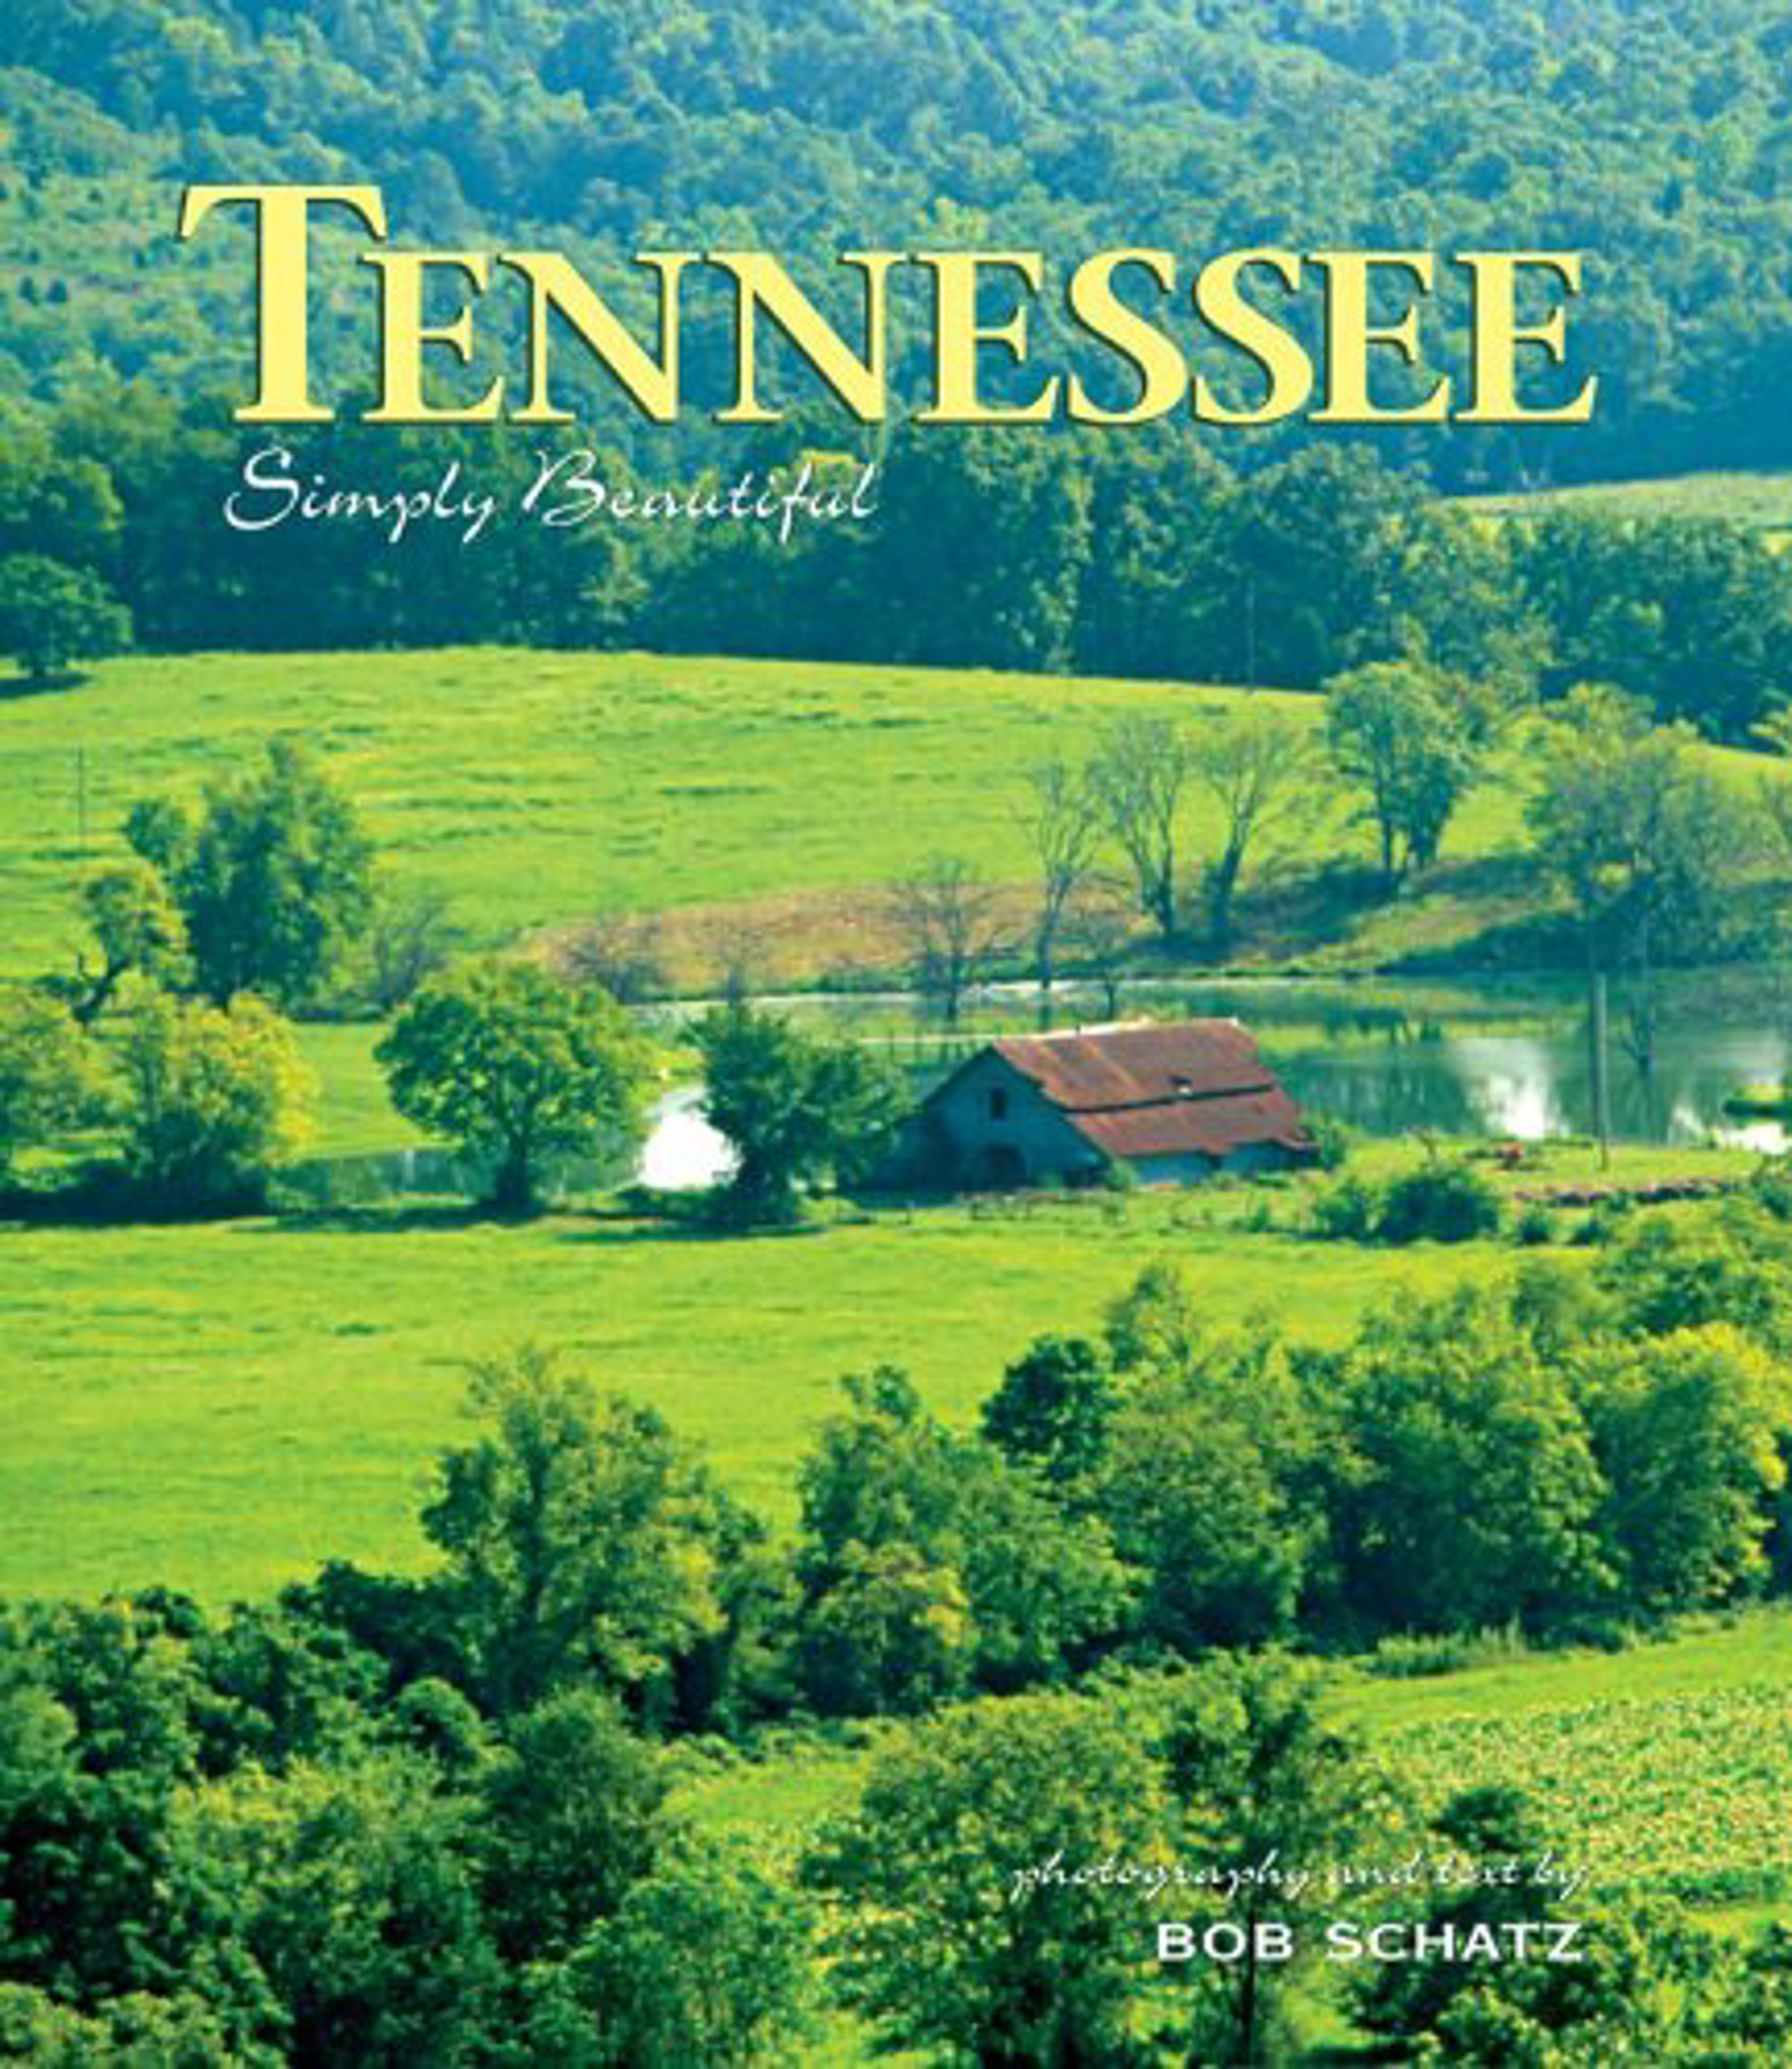 Tennessee: Simply Beautiful by Bob Schatz